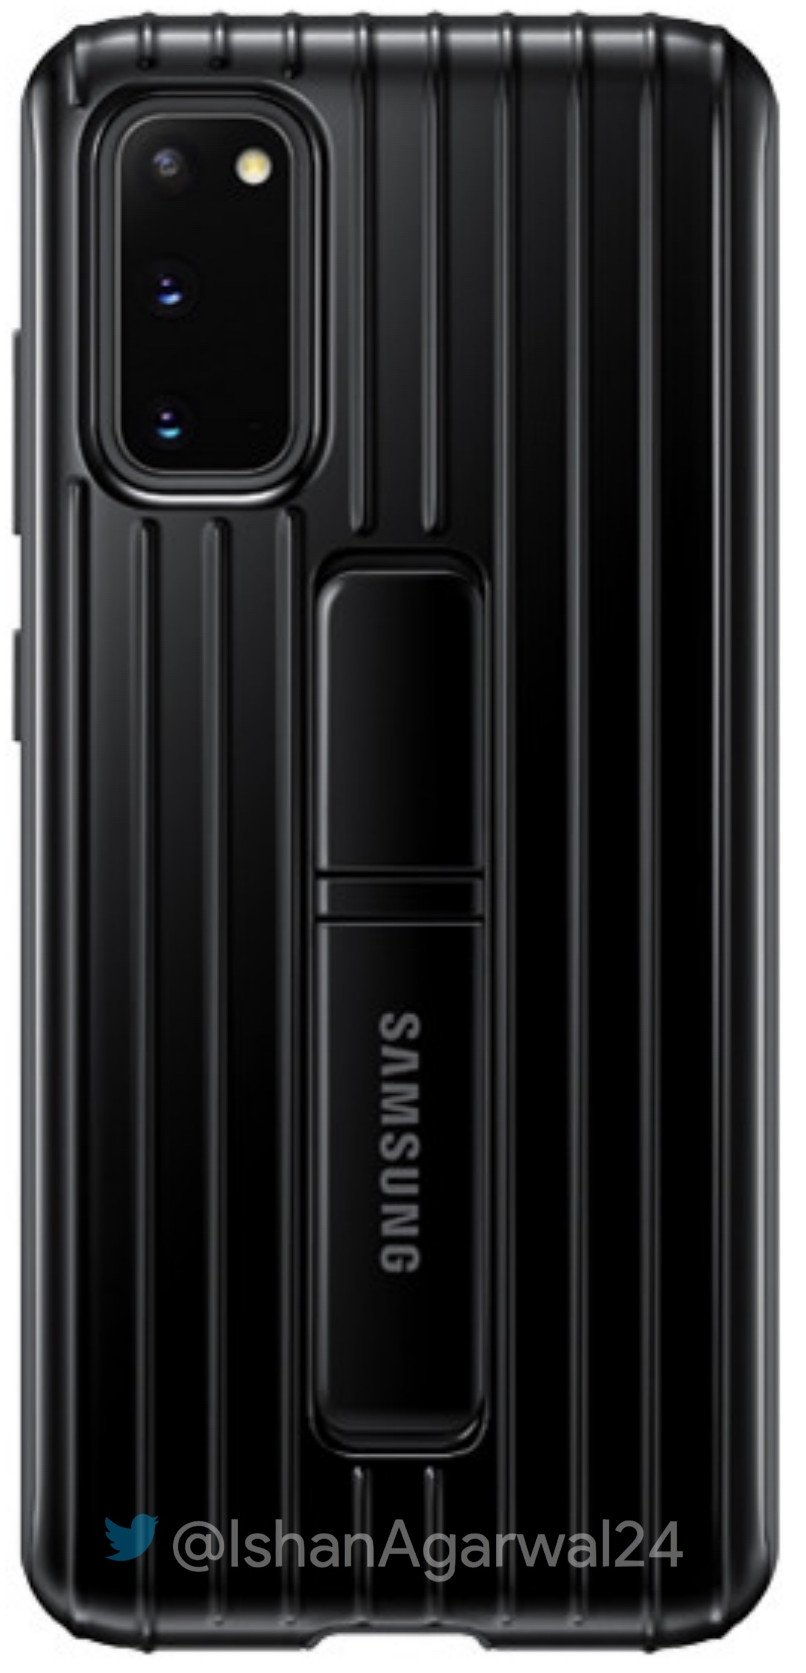 Galaxy S20 rugged case leak